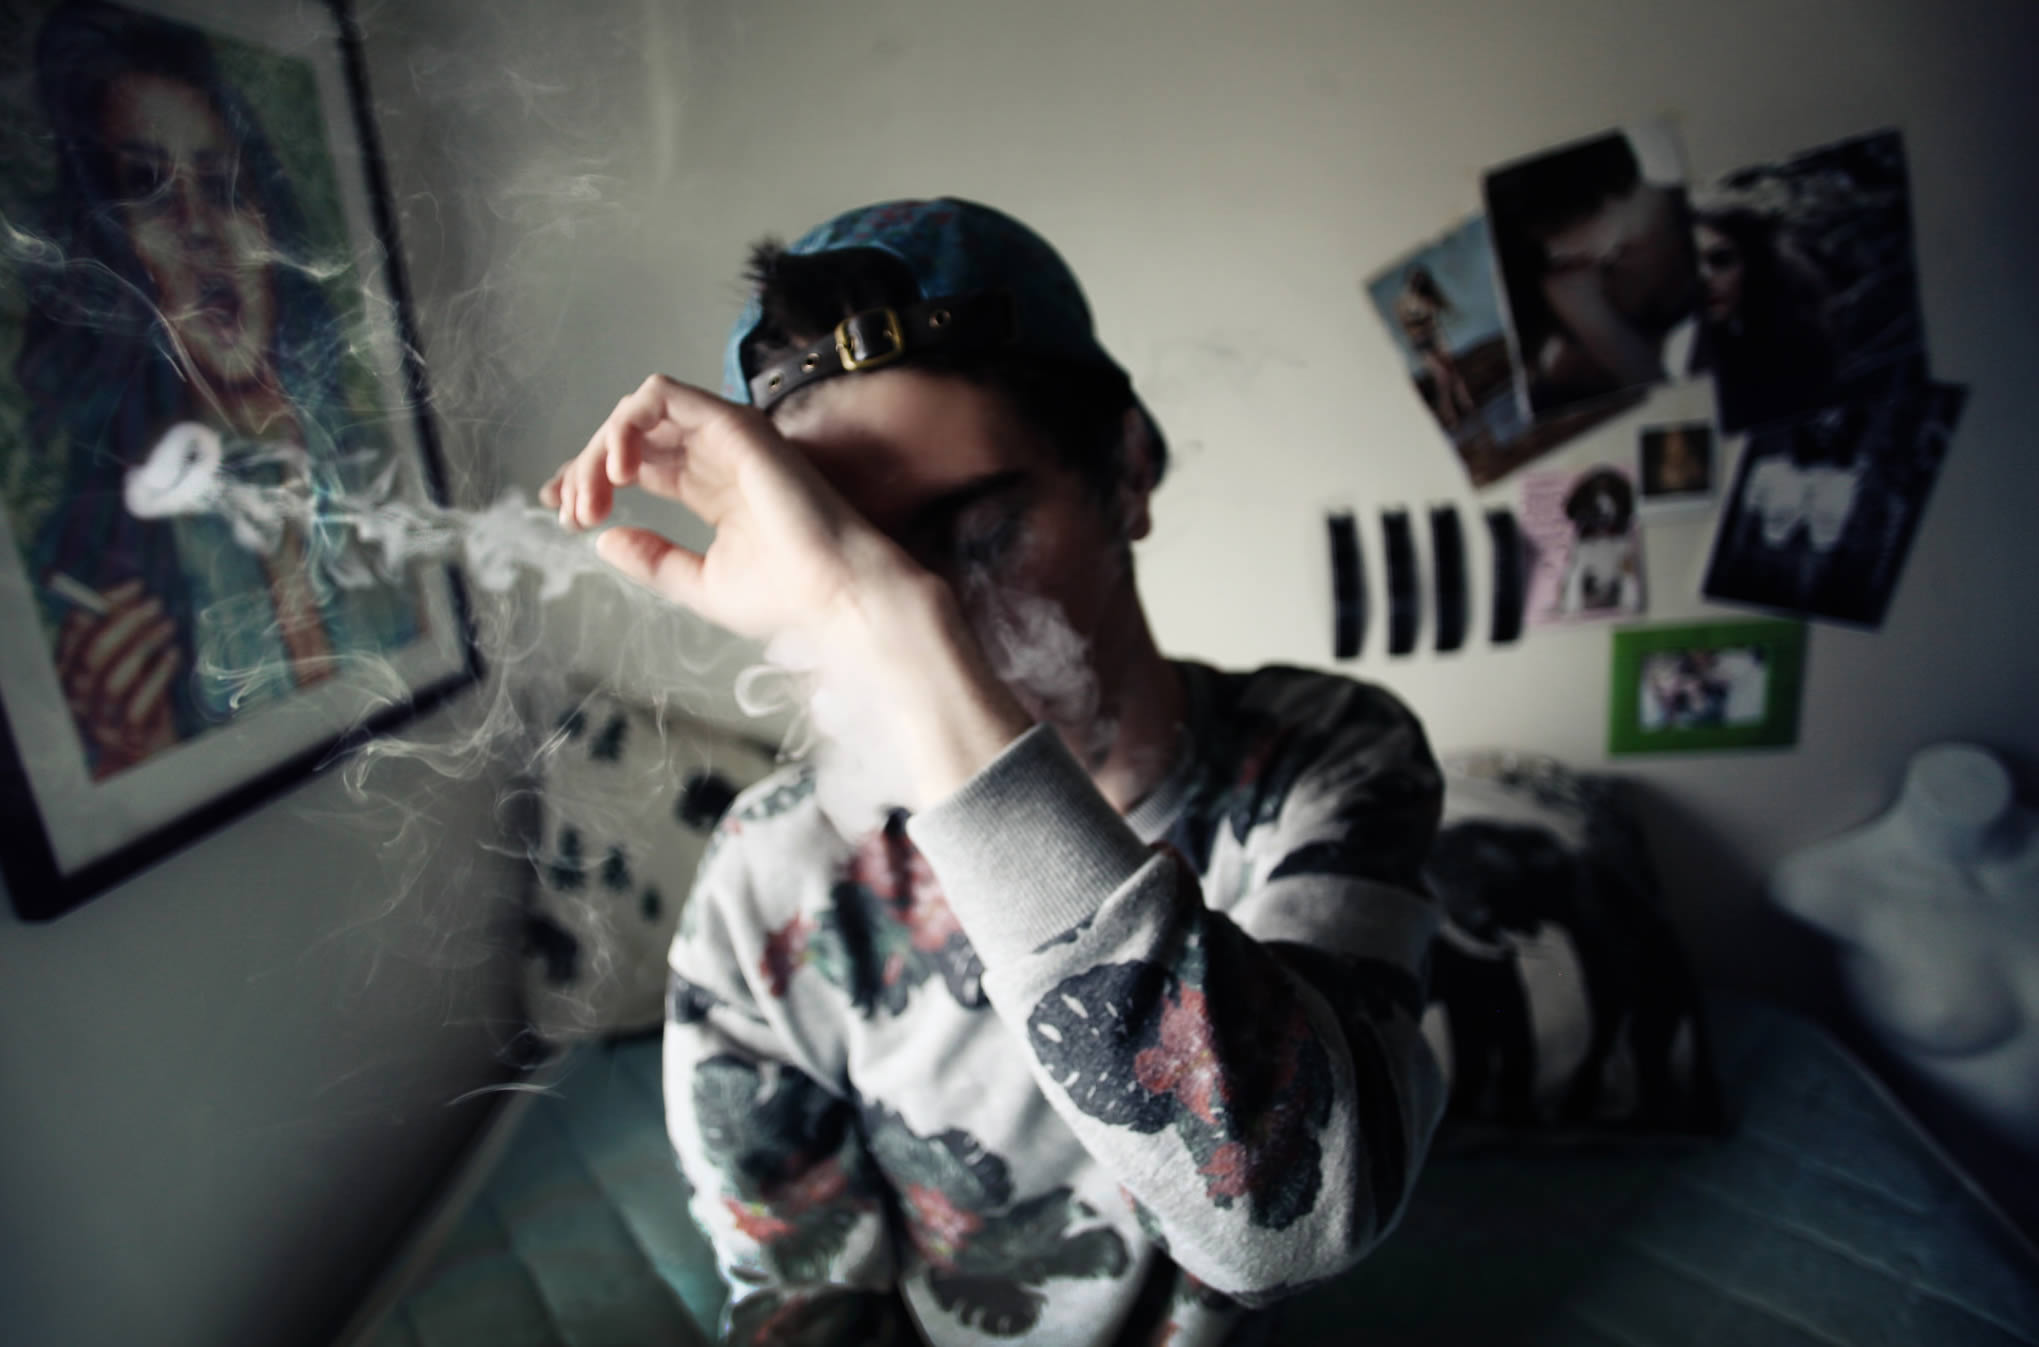 guy wearing cap and smoking, in bedroom